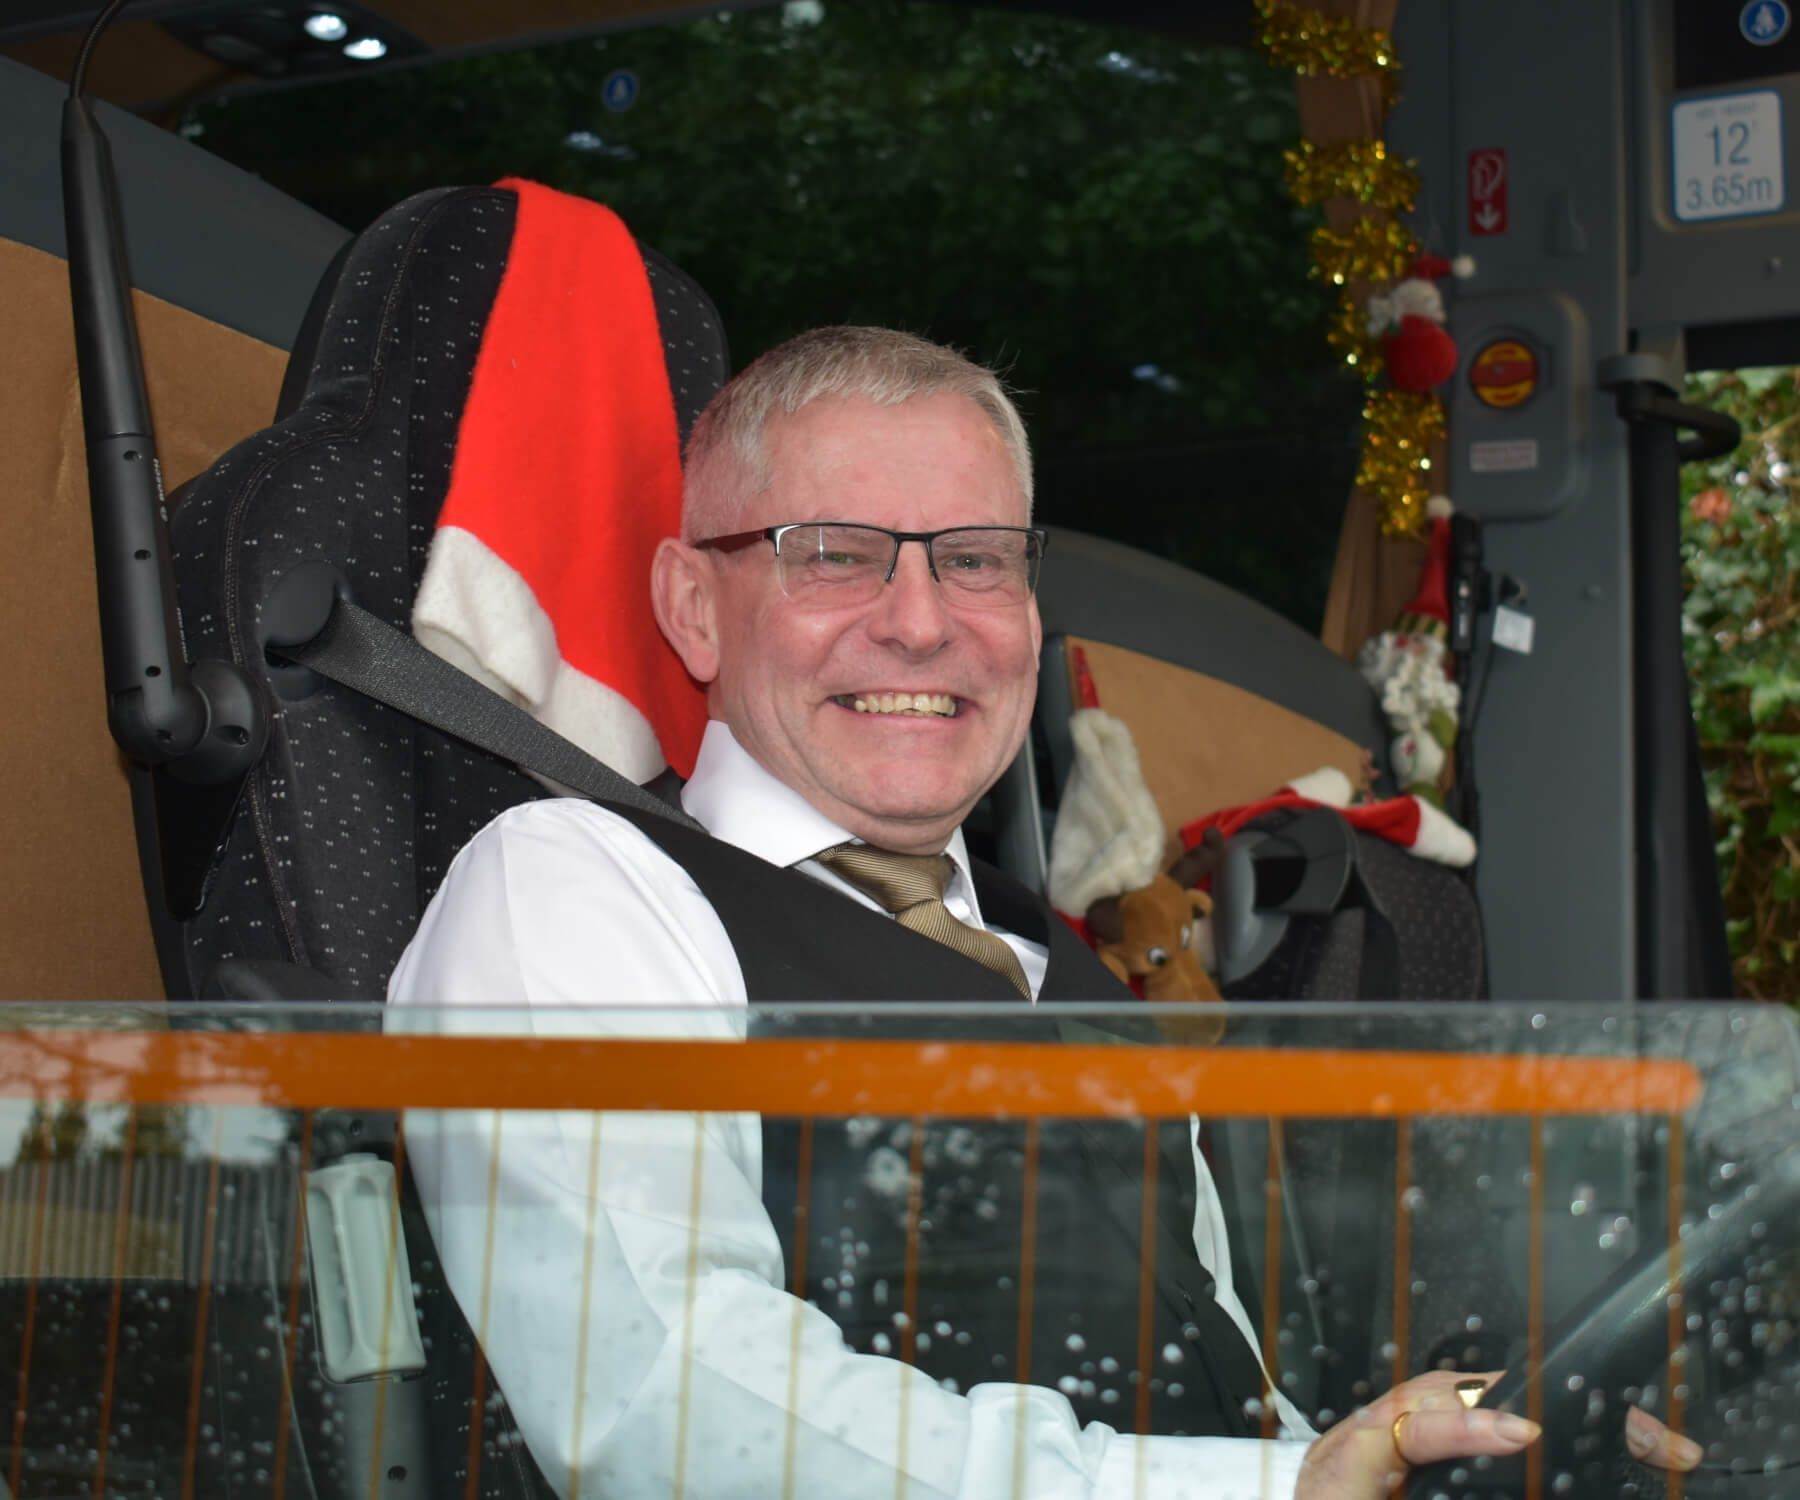 2 David Houghton behind the wheel of his 2017 Tourismo. Alan Payling